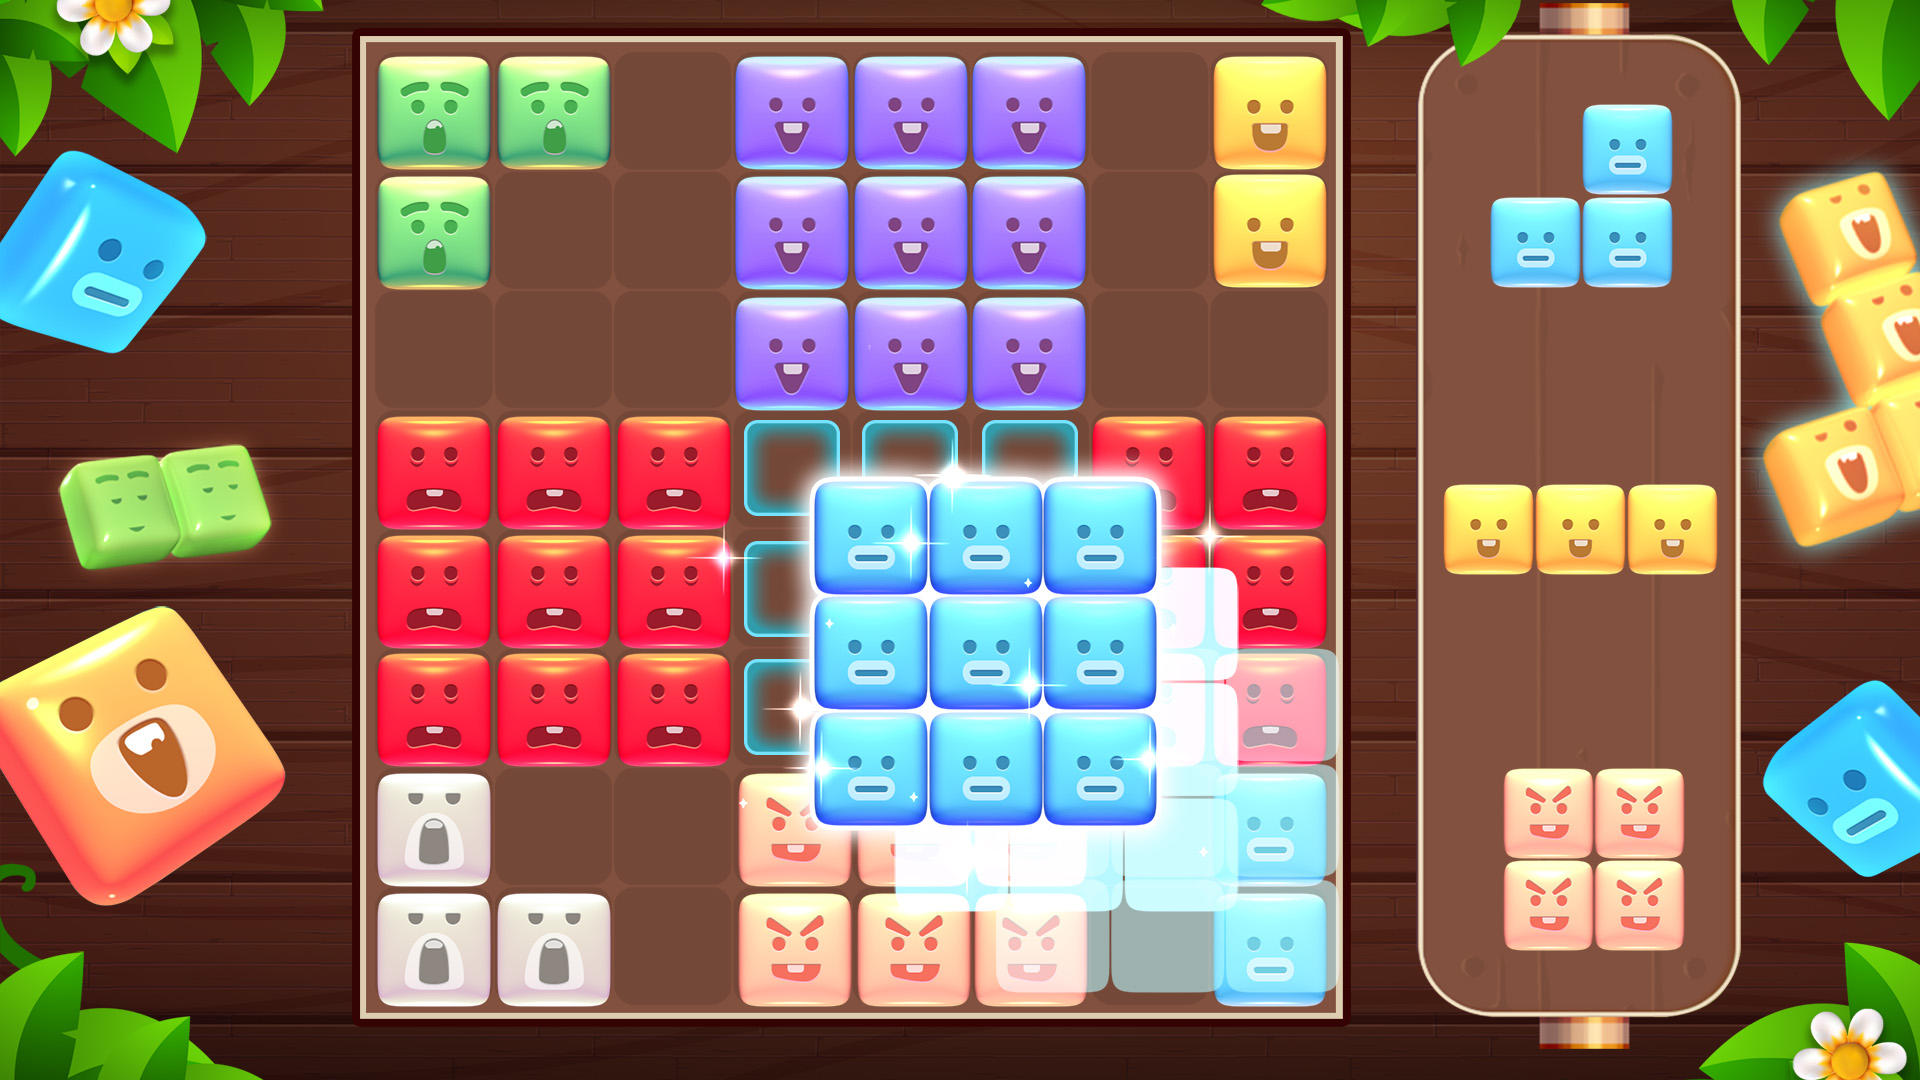 Screenshot 1 of Puzzle a blocchi BT: esplosione a blocchi 4.1.1